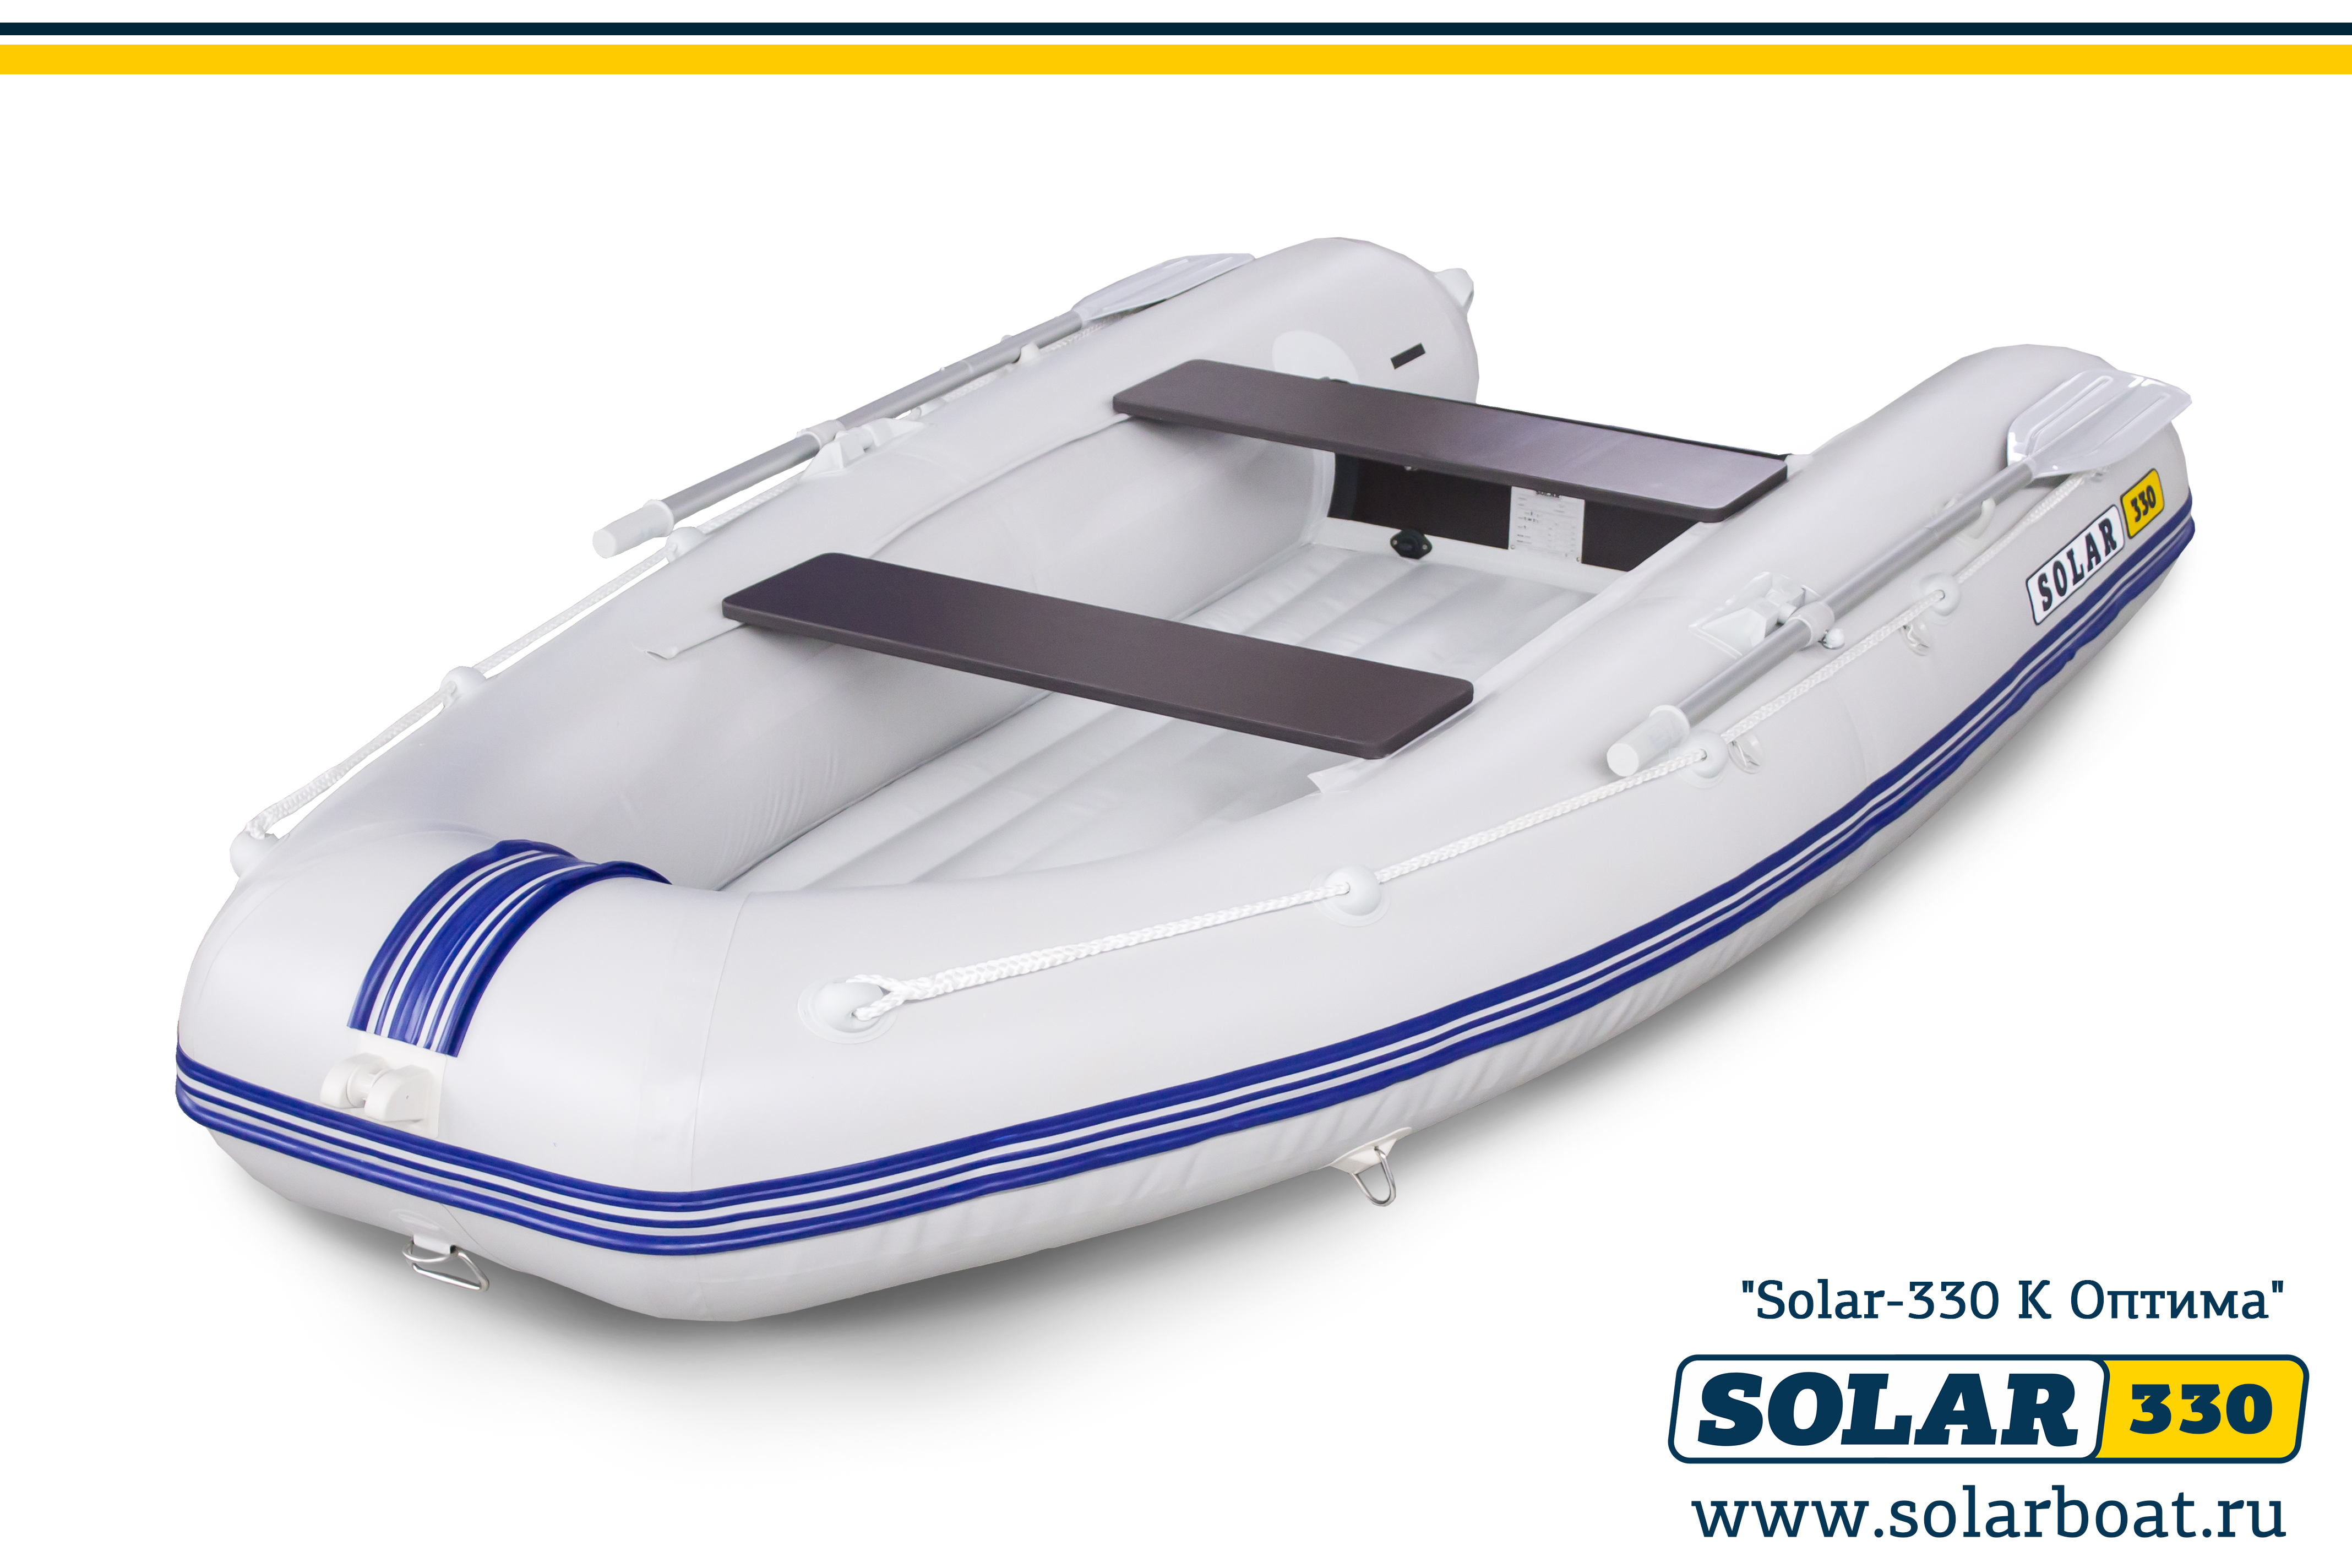 Inflatable PVC boat SOLAR-330 К (Optima)